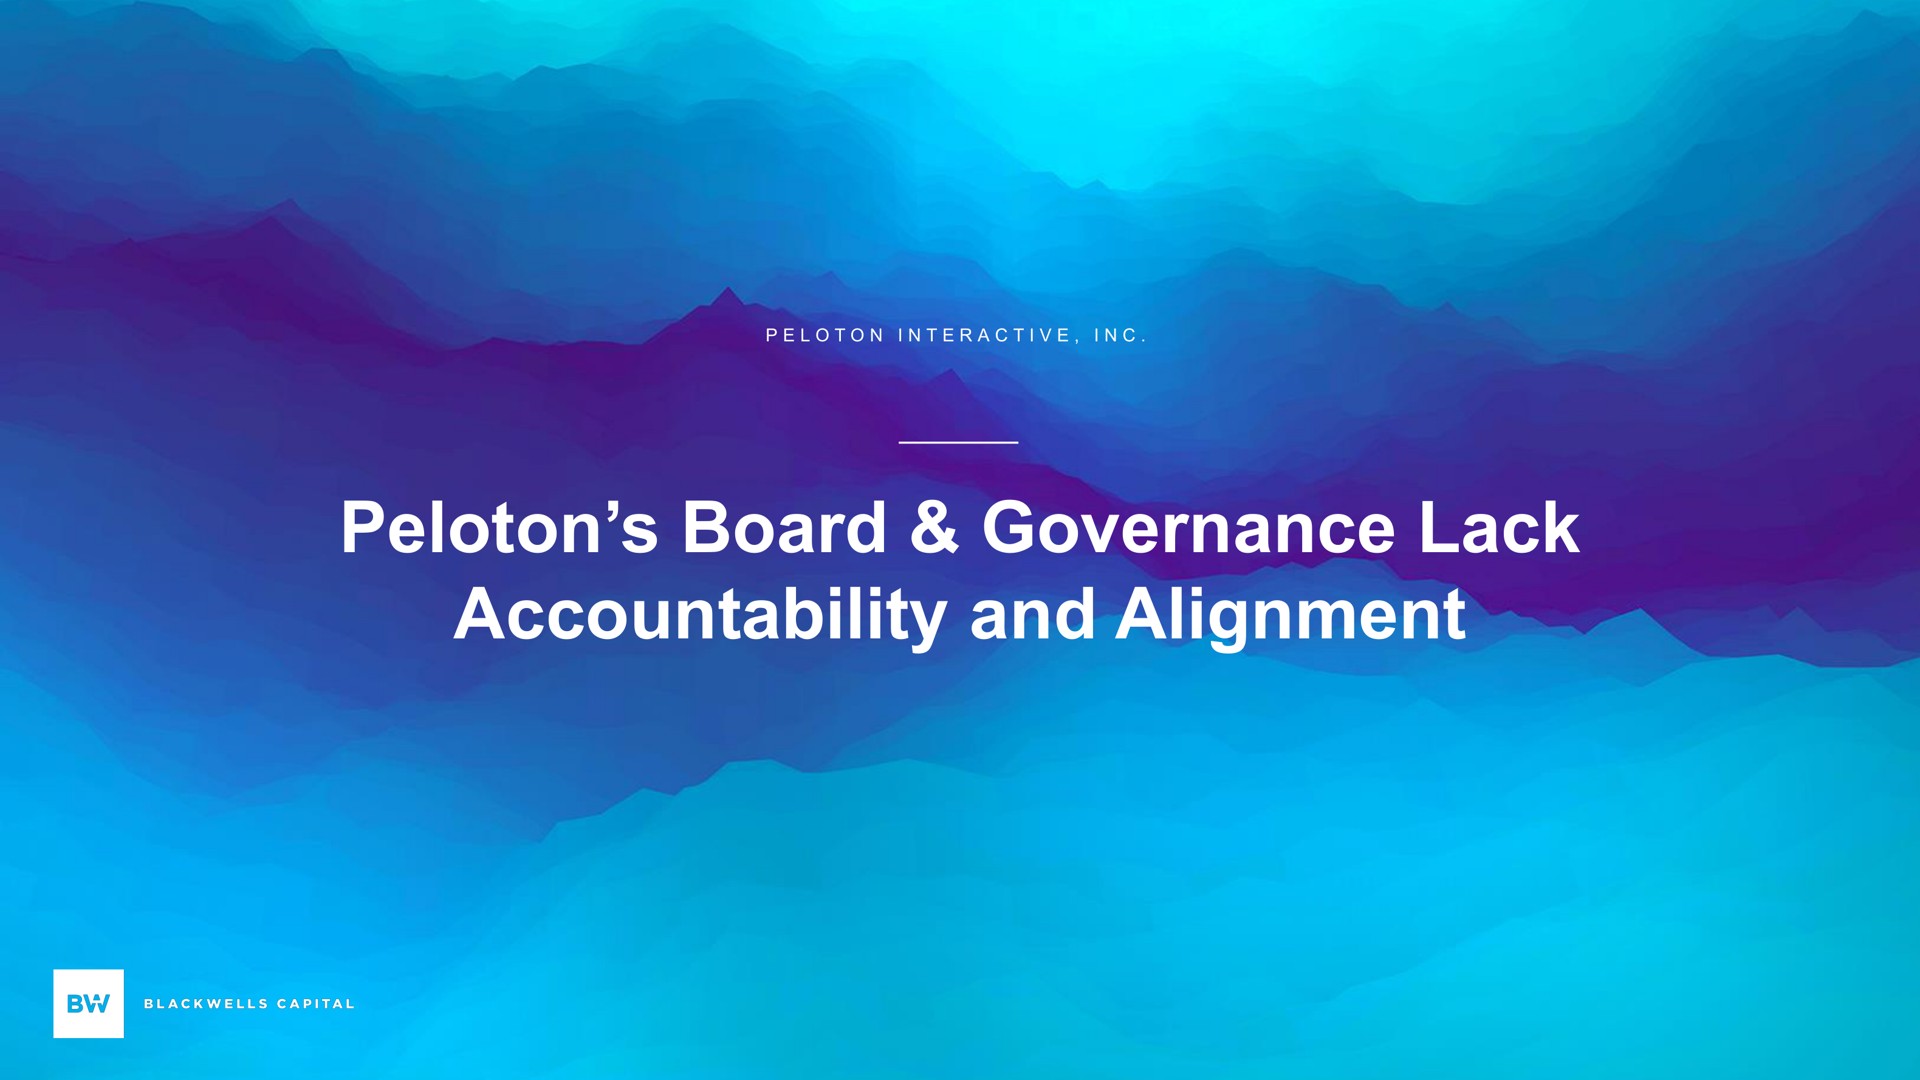 peloton board governance lack accountability and alignment | Blackwells Capital